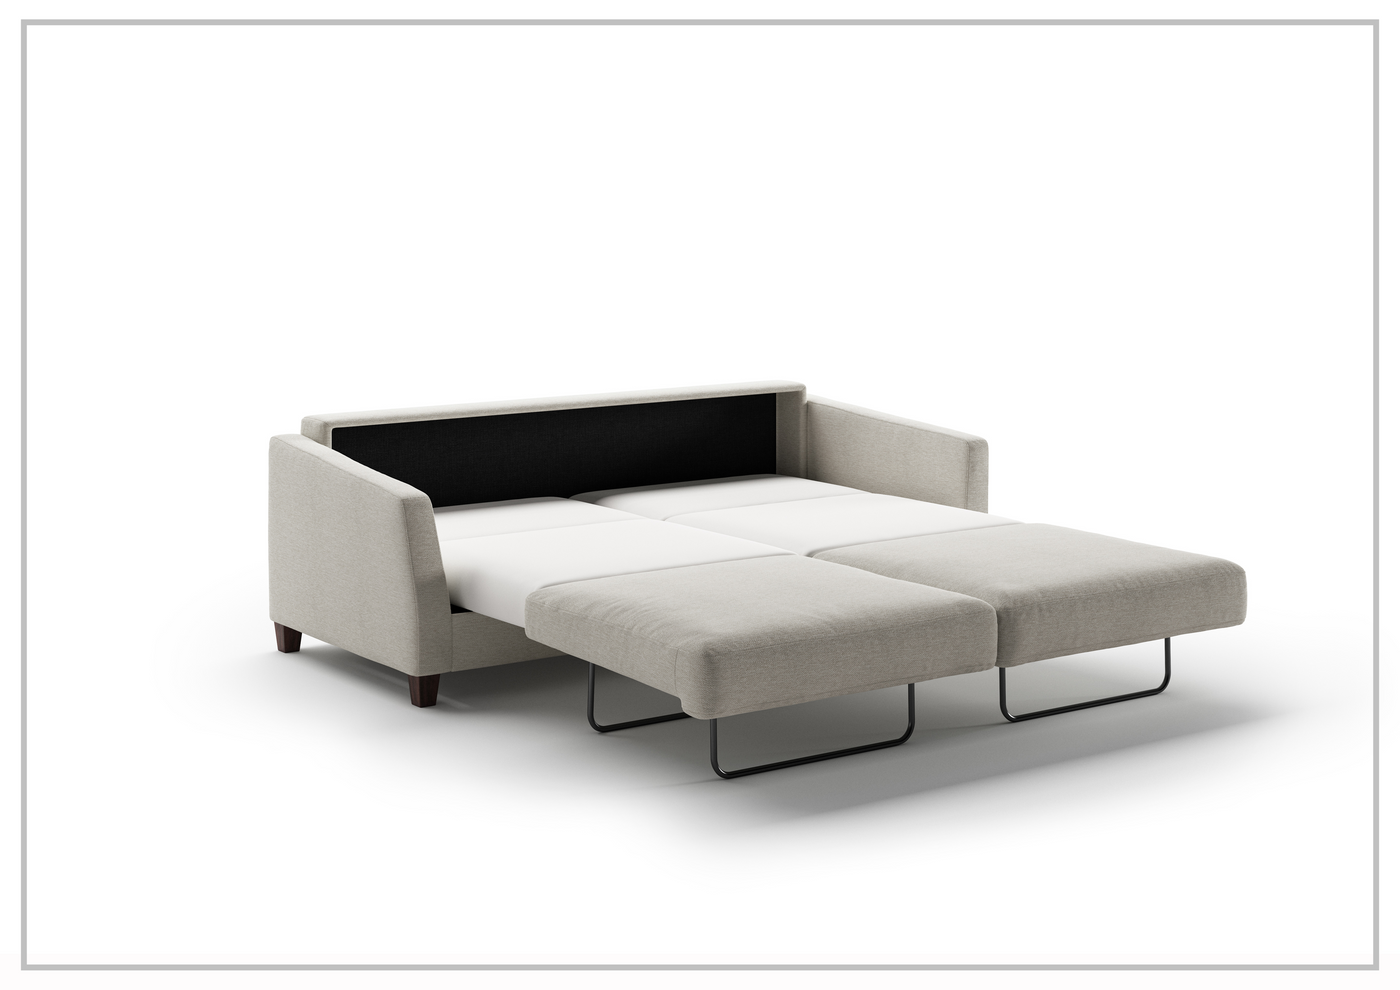 Luonto Monika King Sleeper Sofa With Wood/Chrome Legs